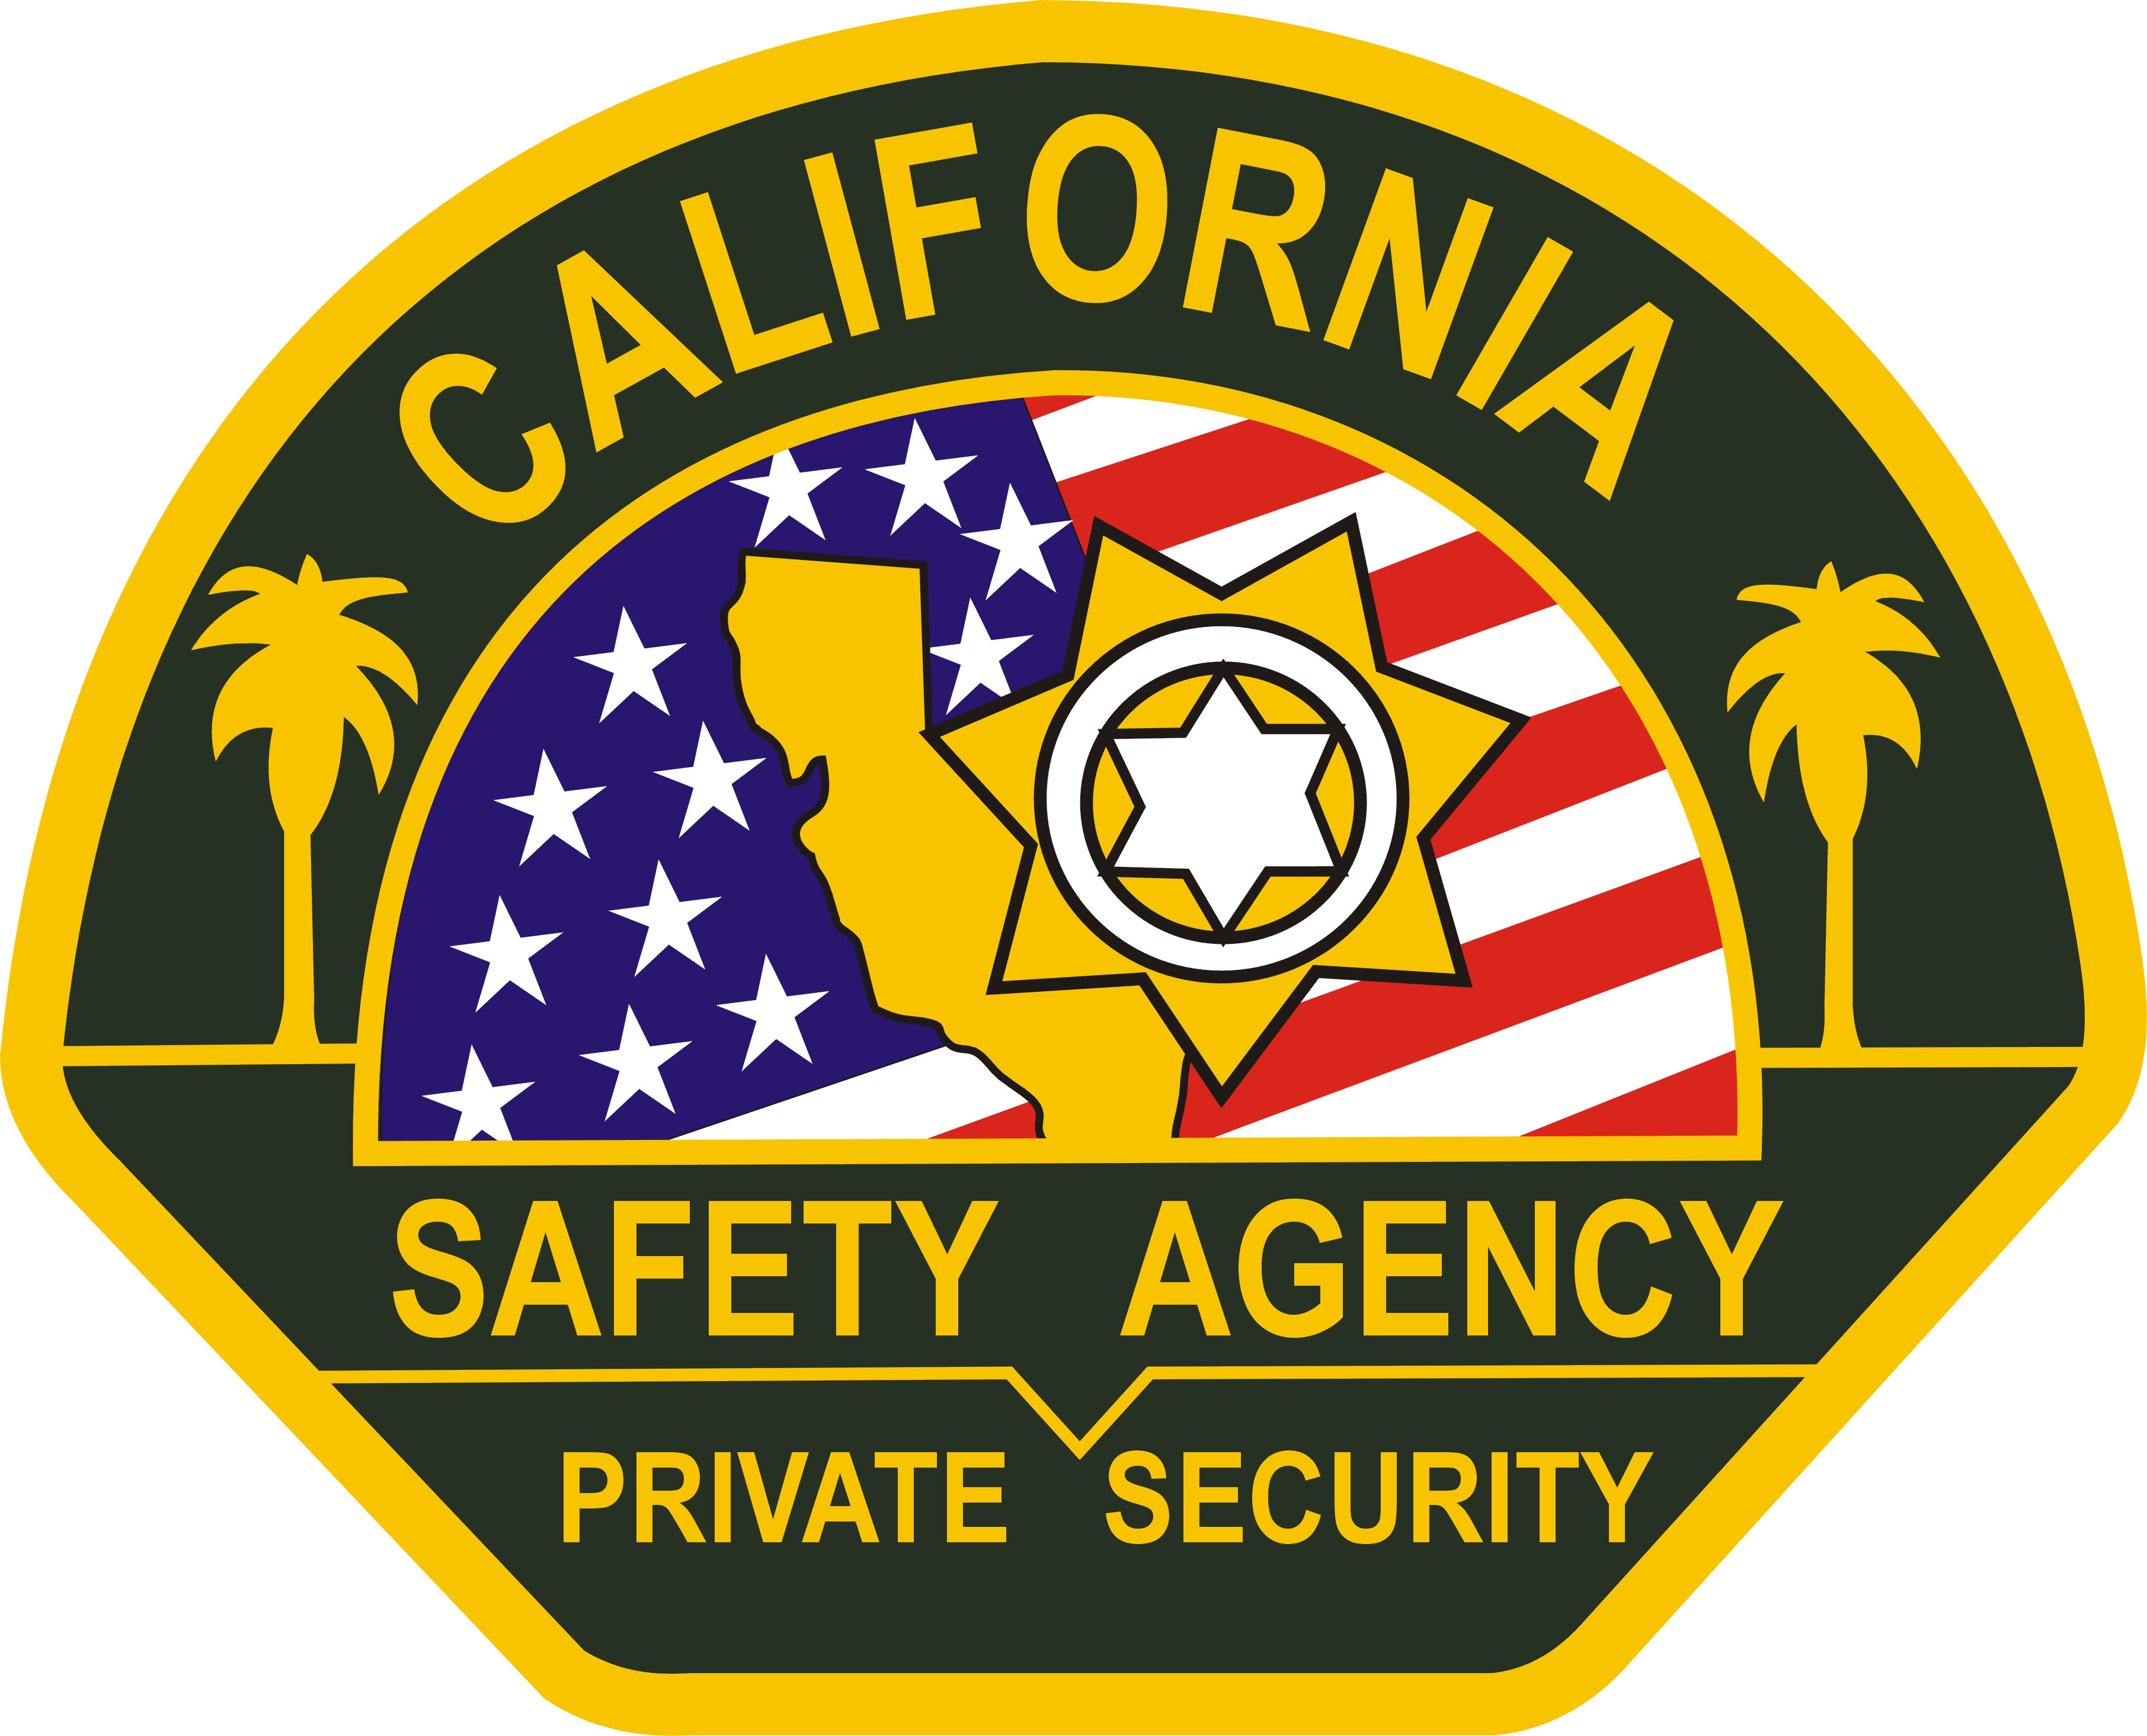 California Safety Agency